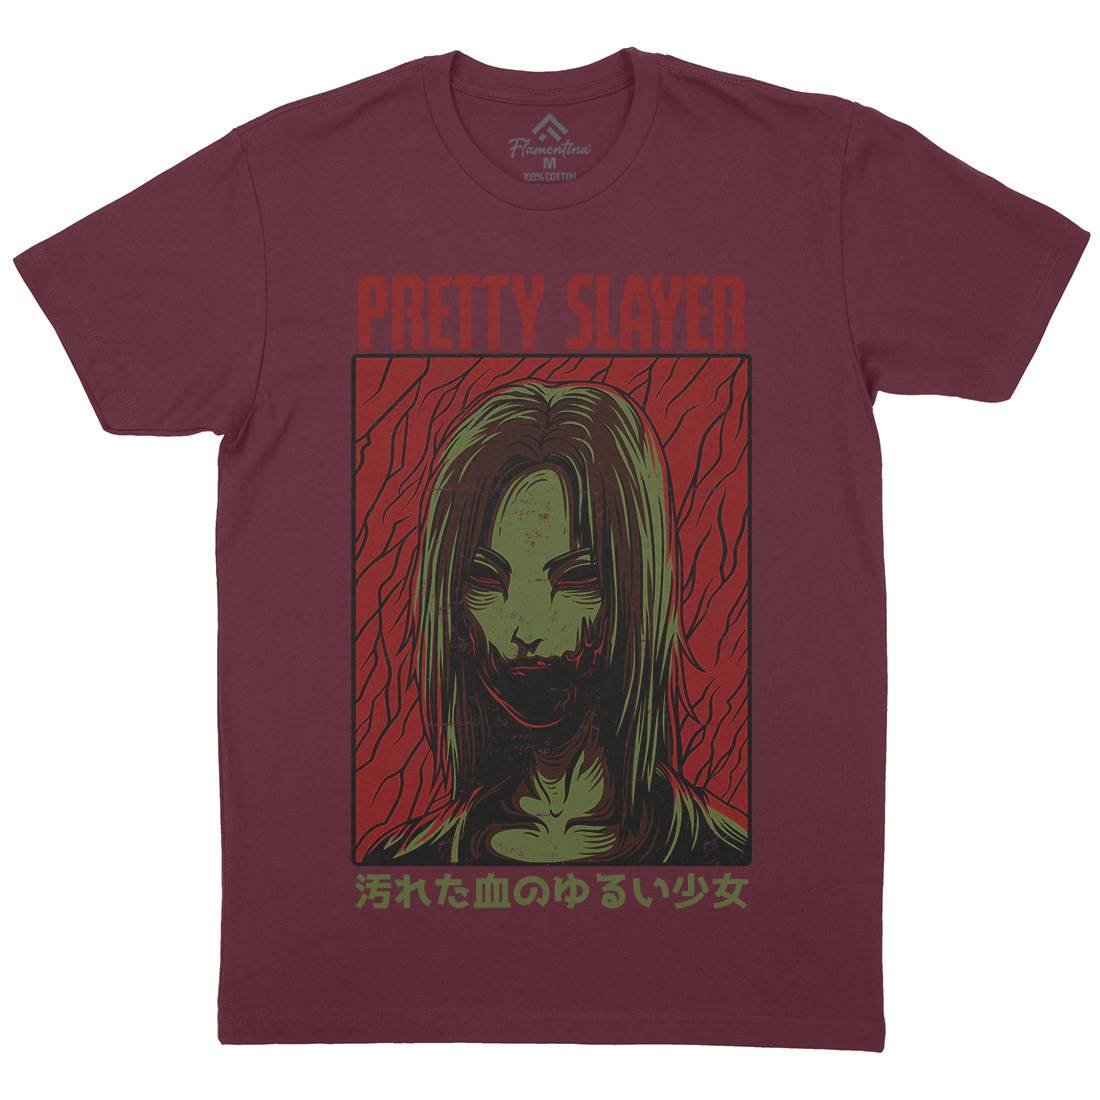 Pretty Slayer Mens Crew Neck T-Shirt Horror D682